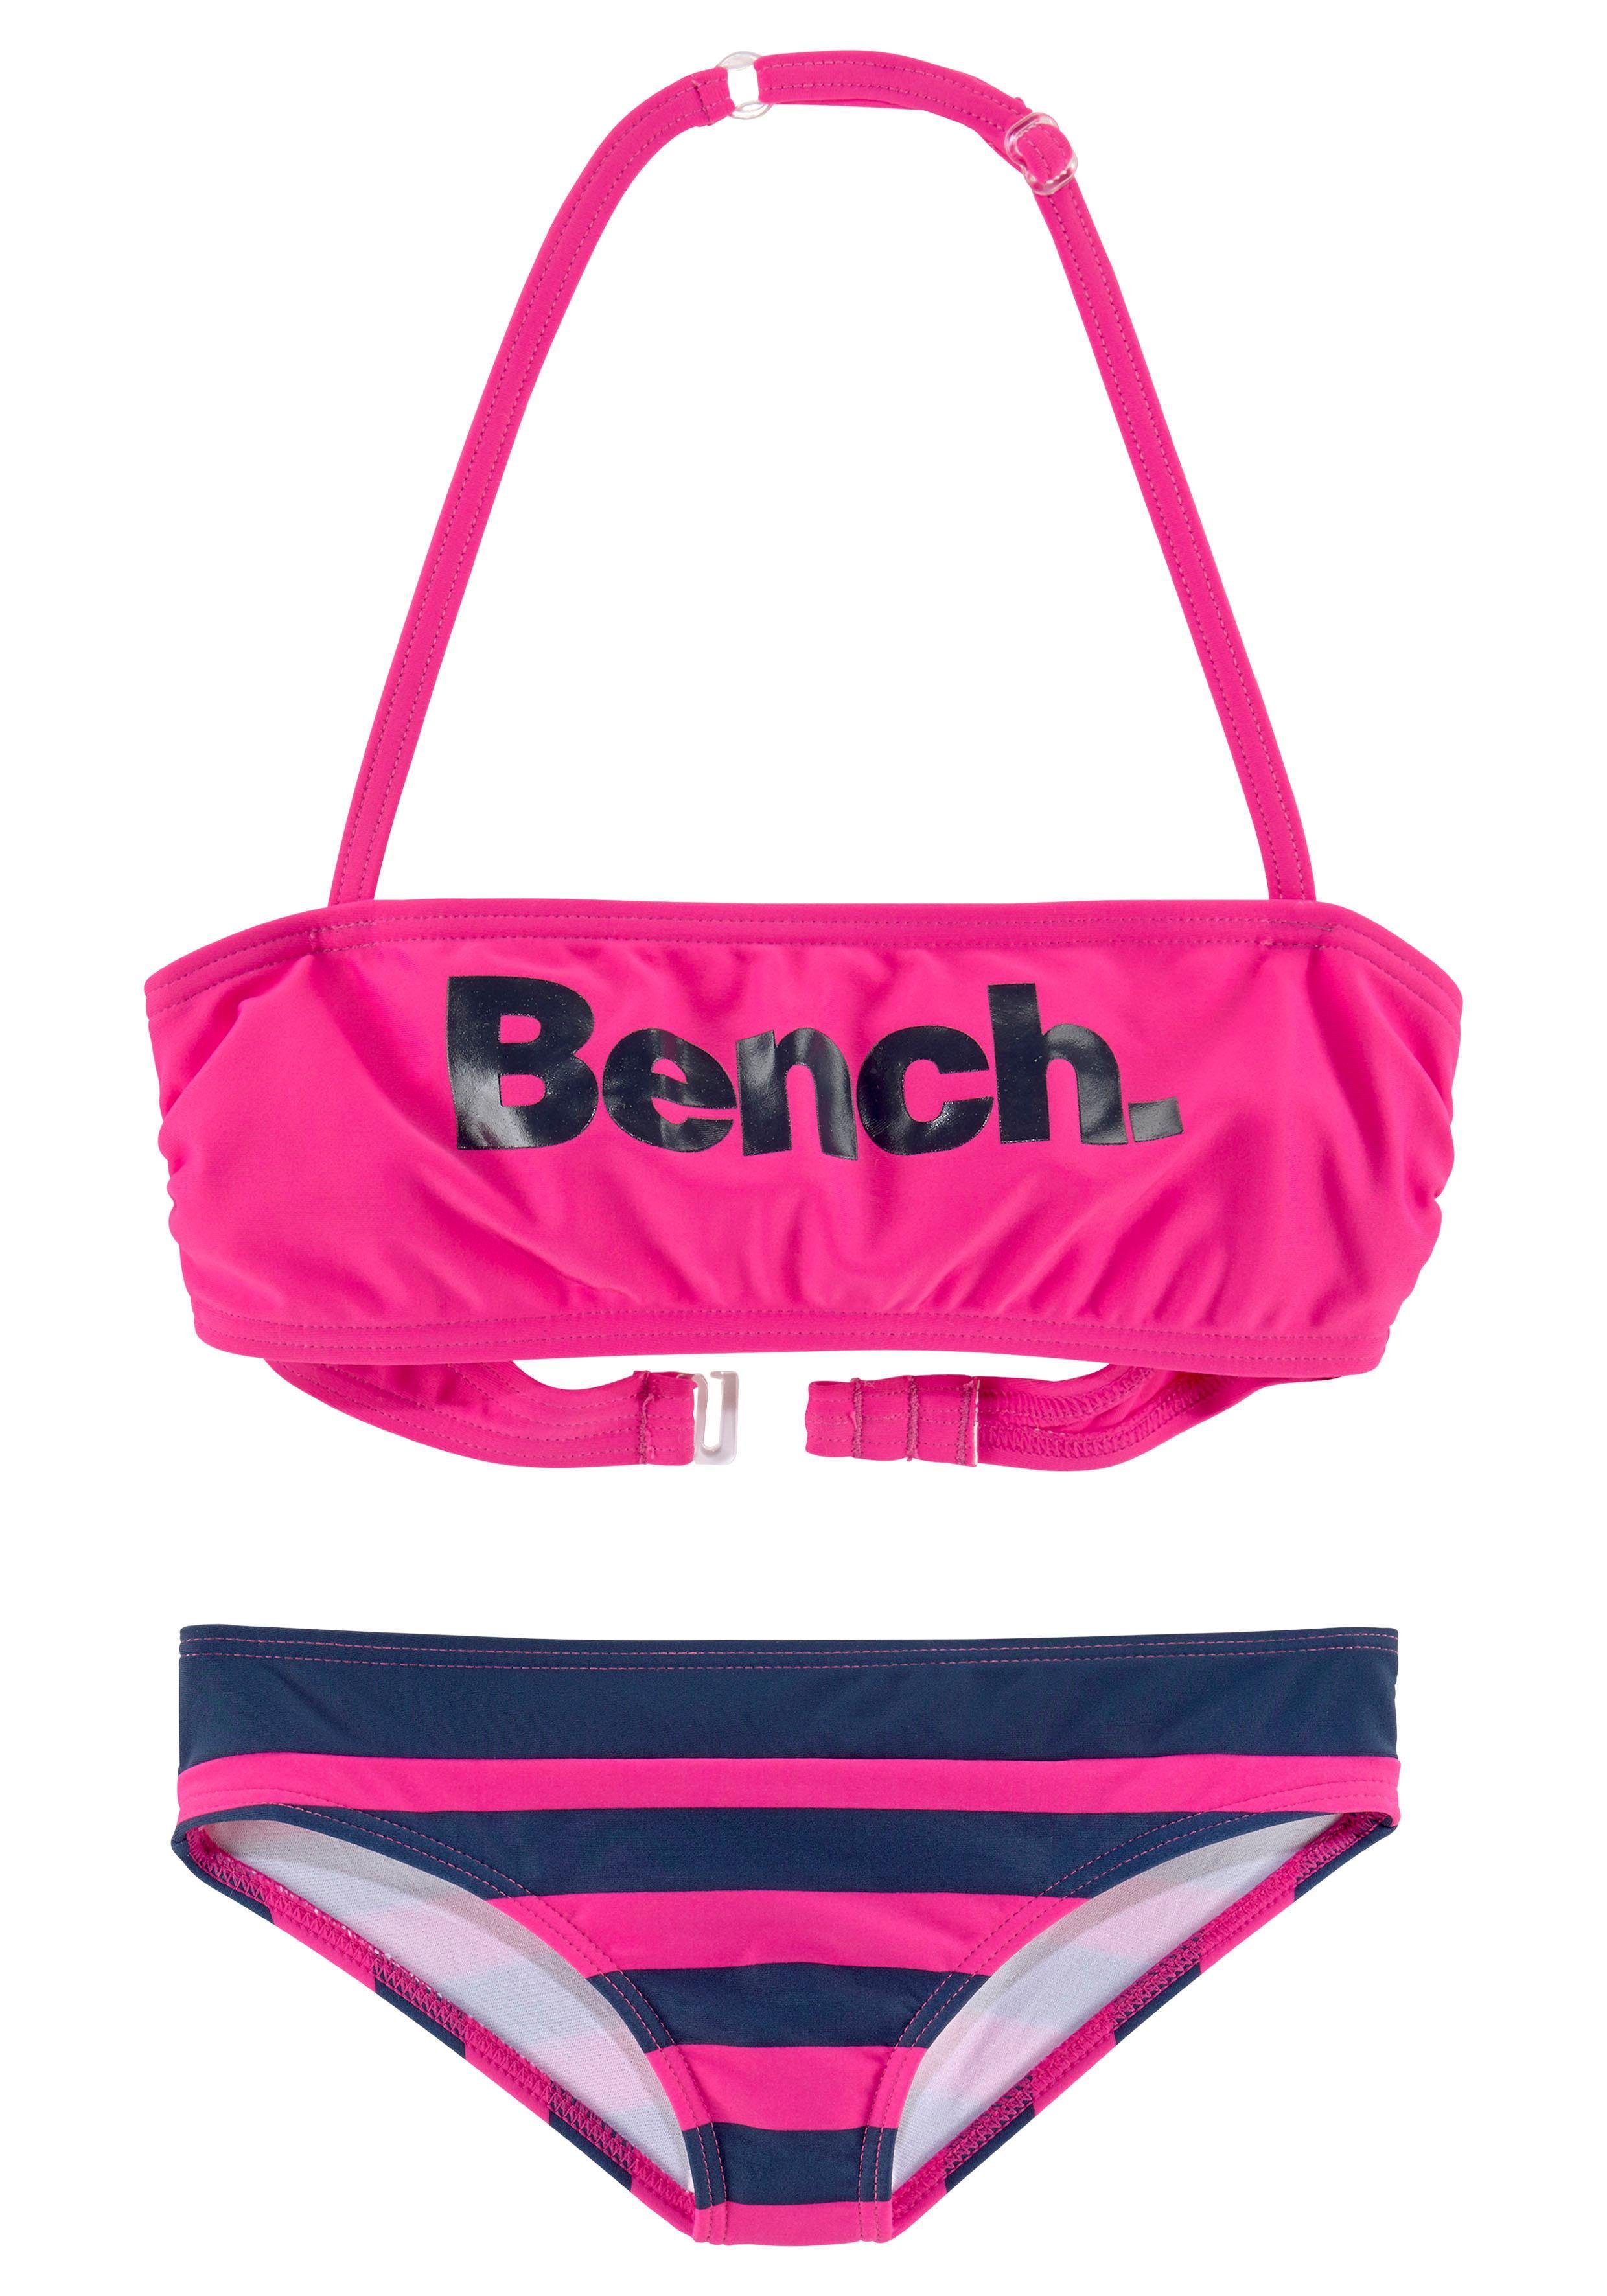 Bench. Bandeau-Bikini mit großem Logoprint pink-marine